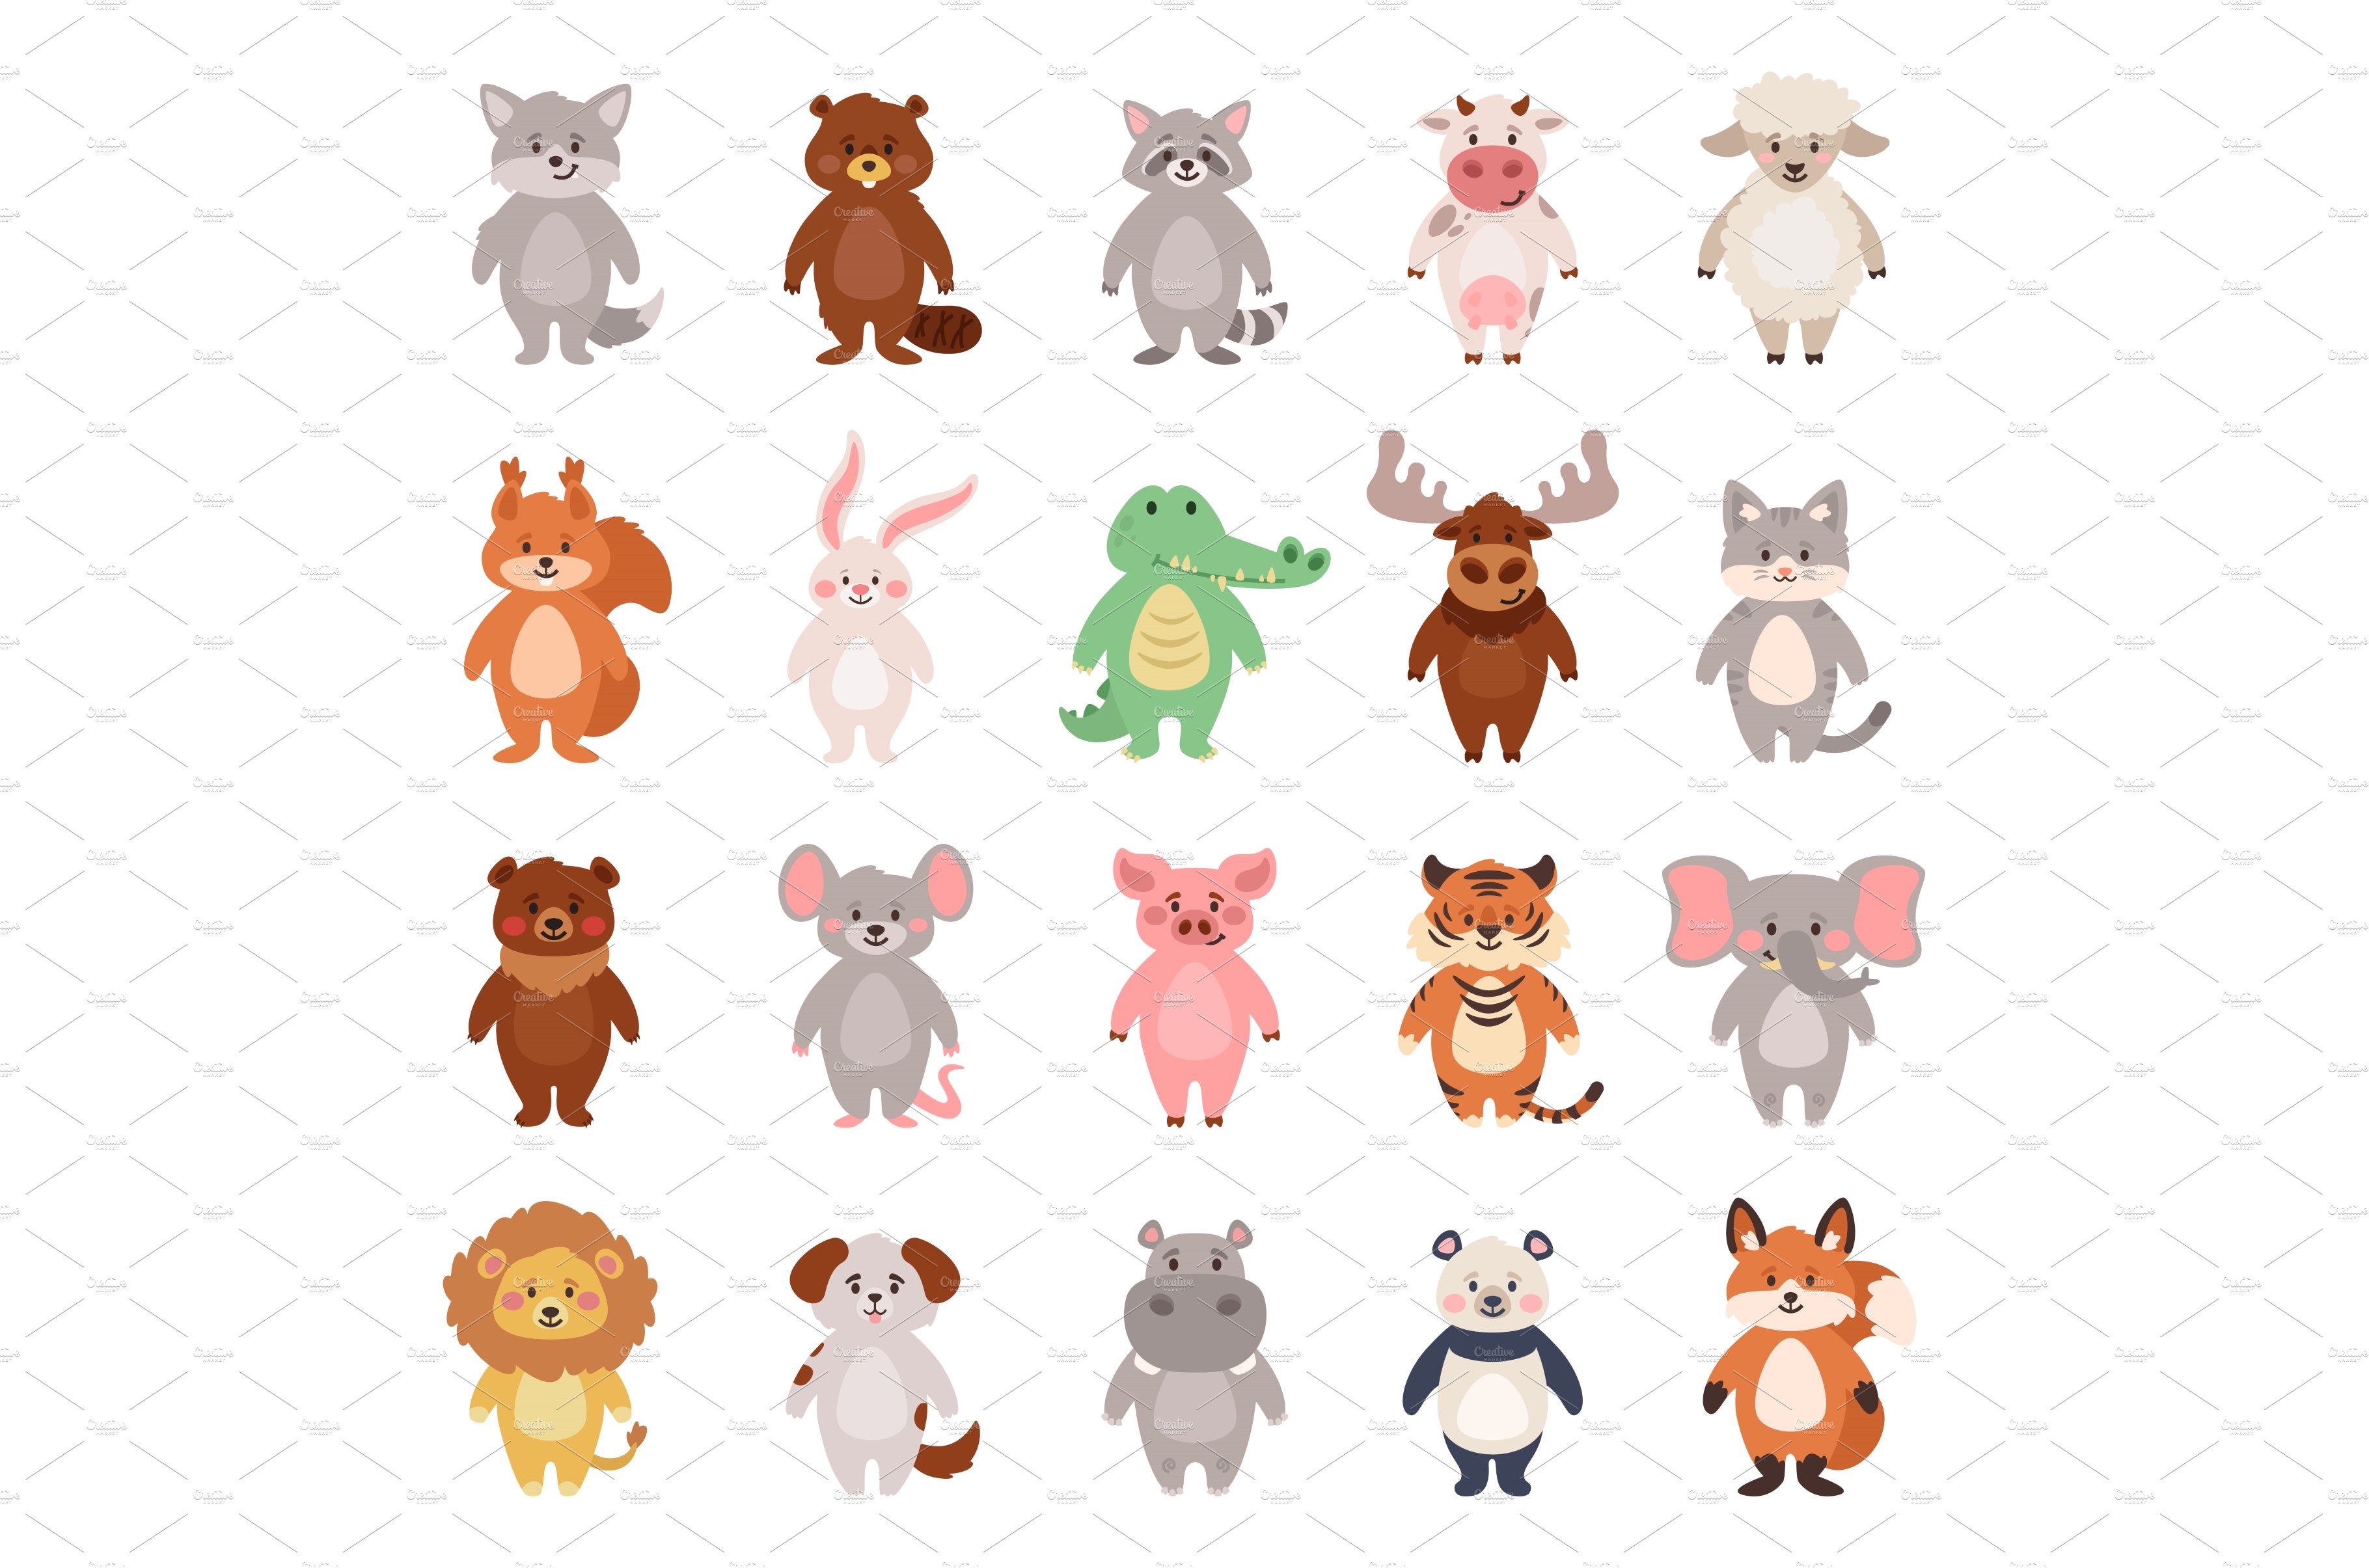 сartoon style big set of animals cover image.